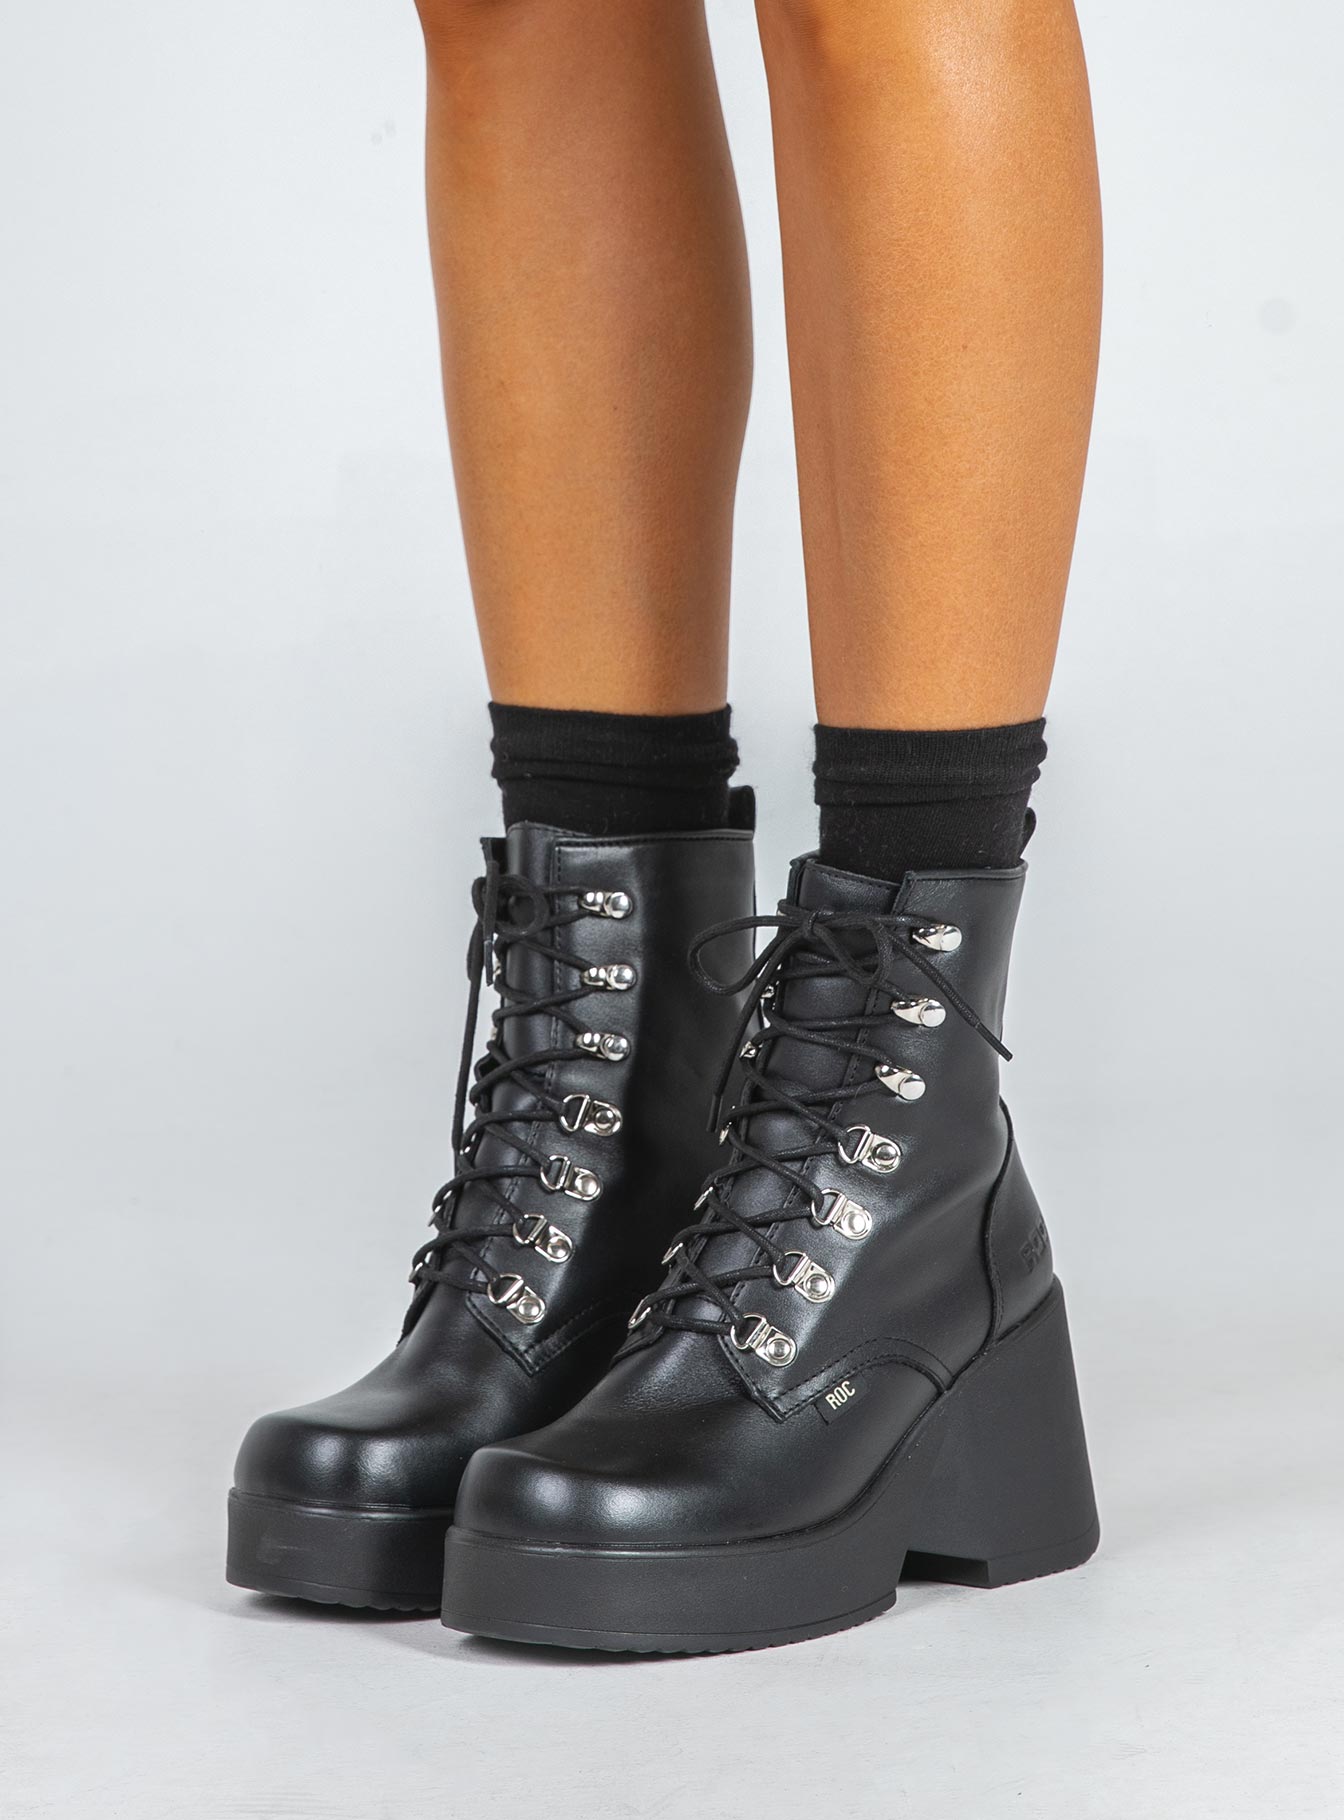 long black boots australia